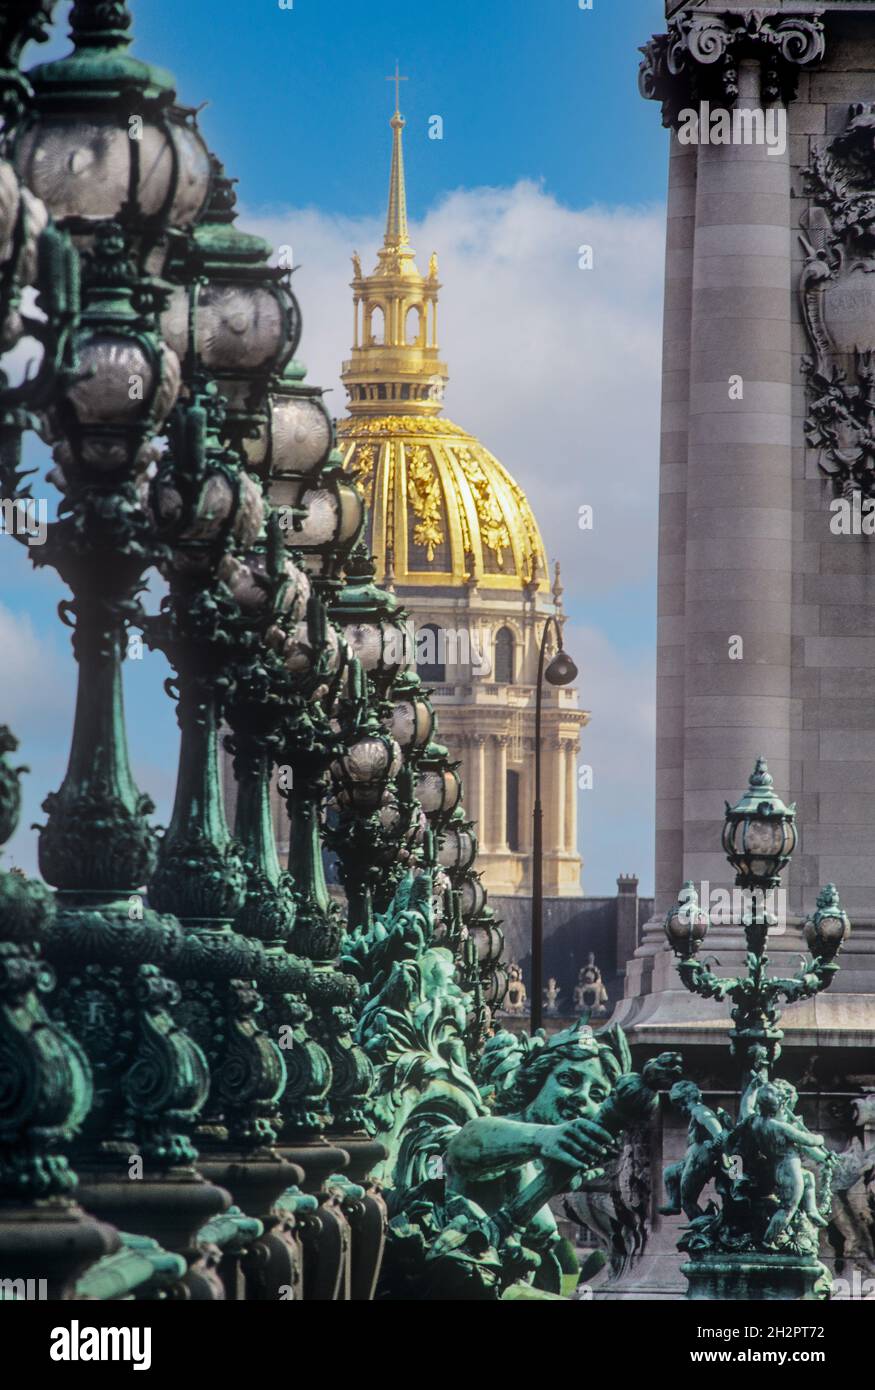 PONT ALEXANDRE Art Nouveu ornate lamps along Pont Alexandre III (bridge) over the Seine river in Paris with gold dome of Hotel des Invalides beyond, Paris France Stock Photo